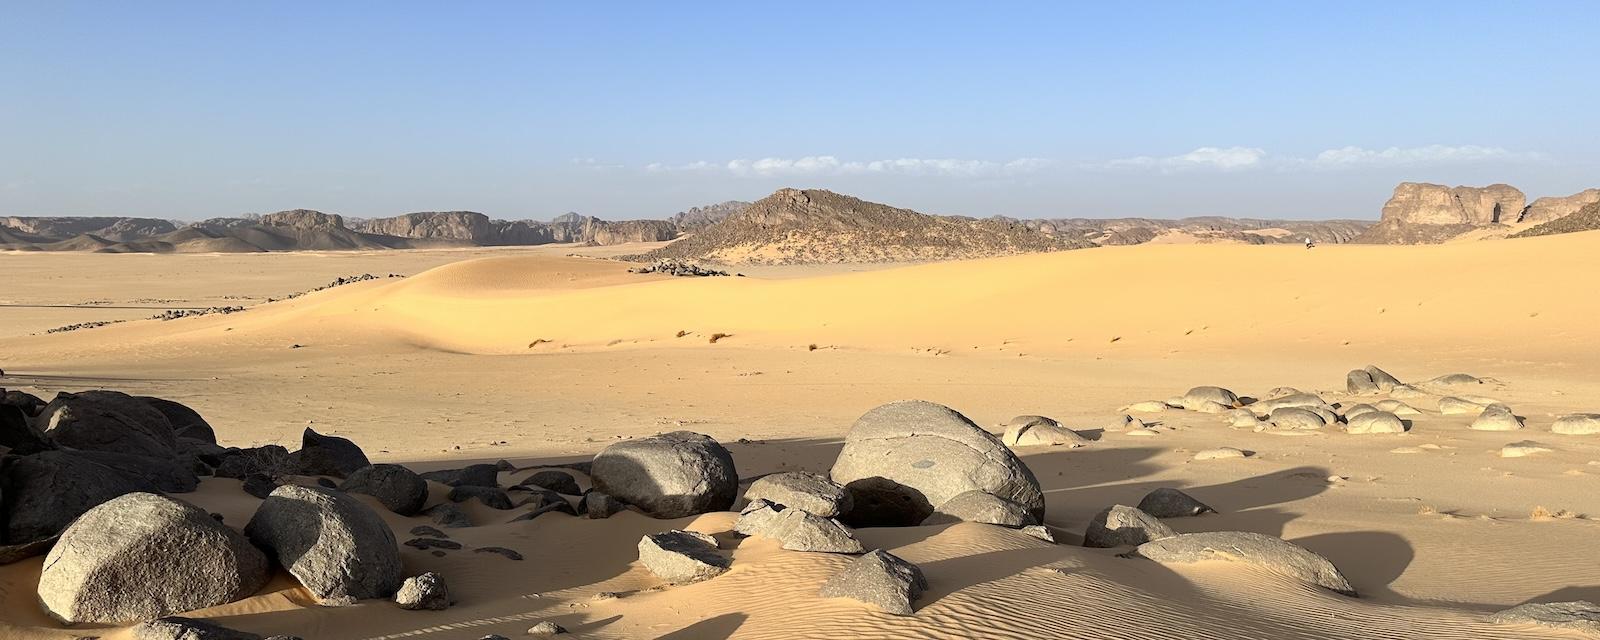 Algeria, deserto del Sahara